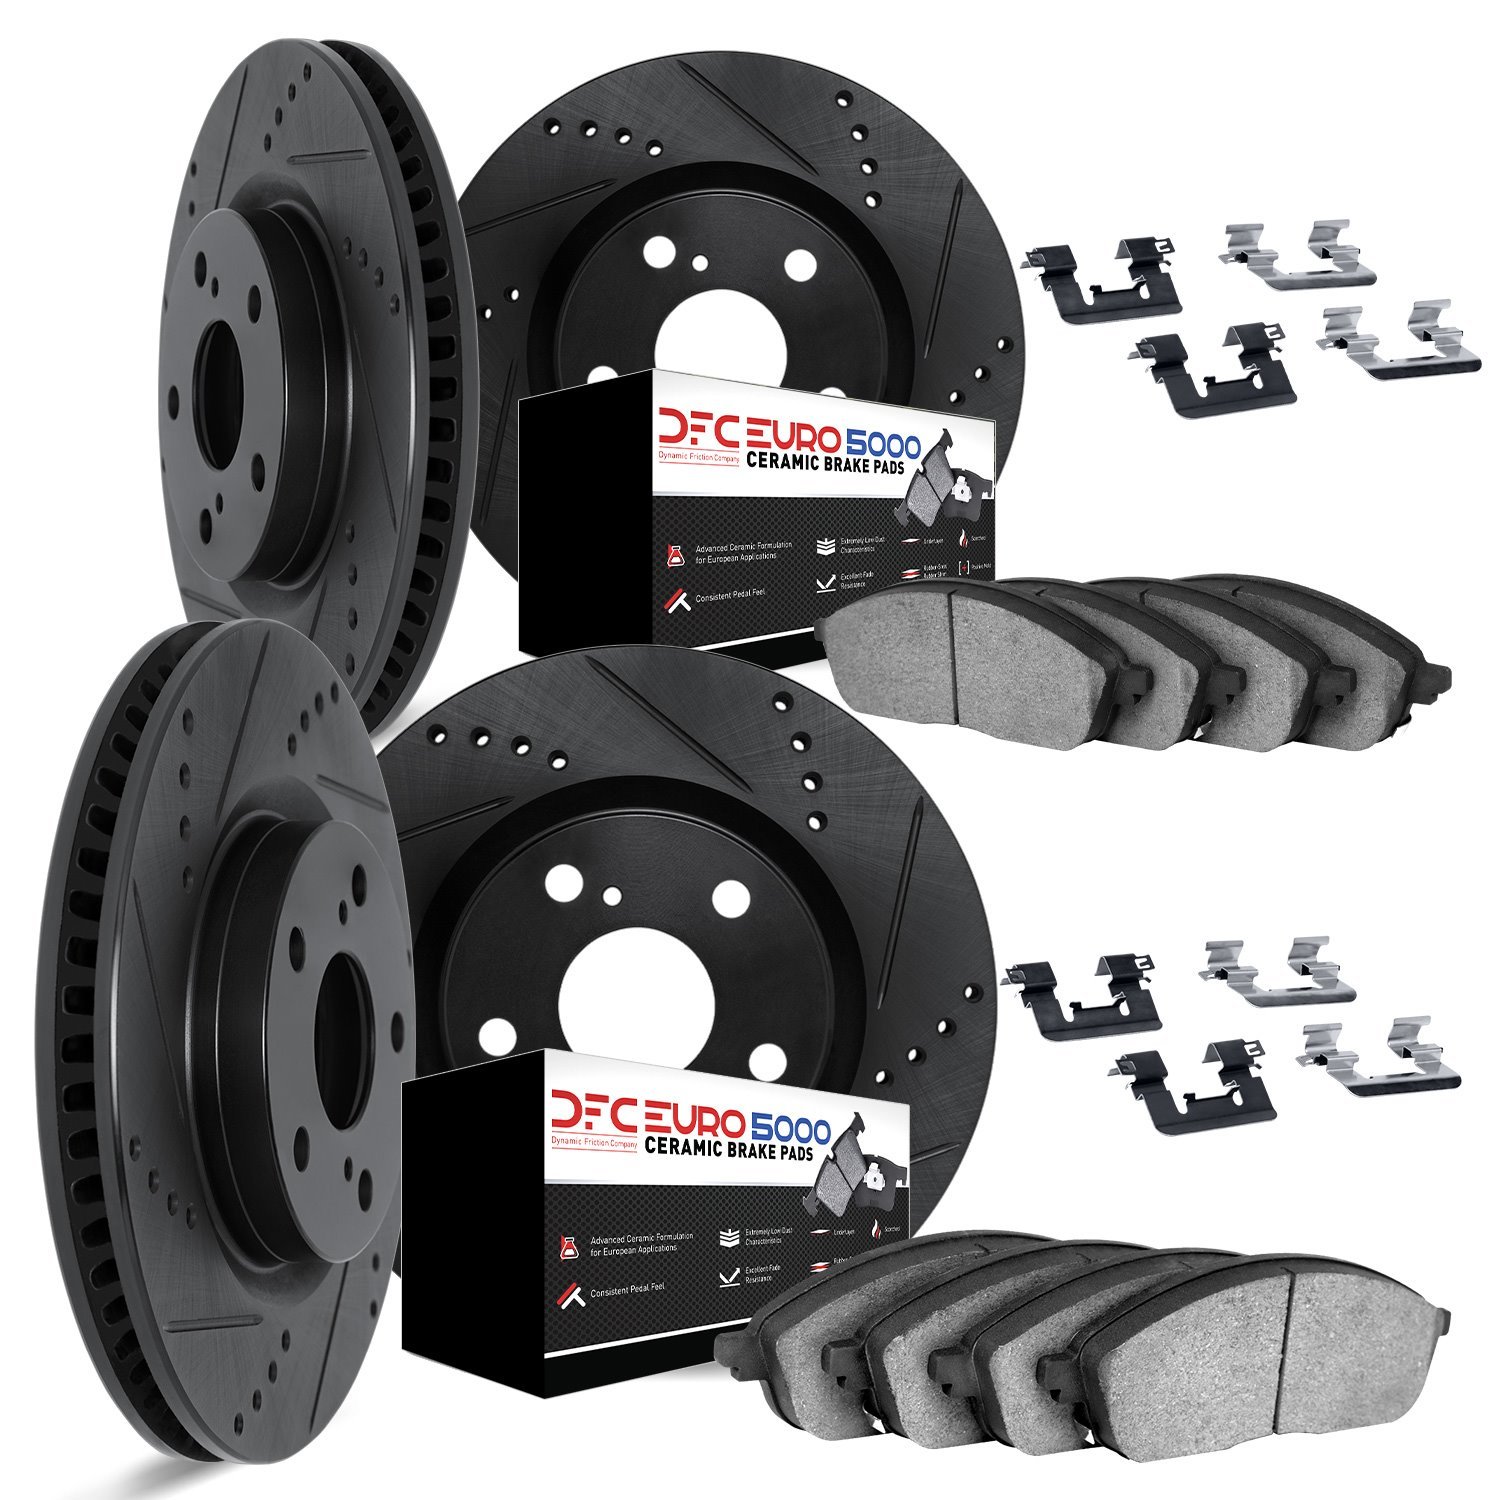 8614-65002 Drilled/Slotted Brake Rotors w/5000 Euro Ceramic Brake Pads Kit & Hardware [Black], 2002-2010 GM, Position: Front and